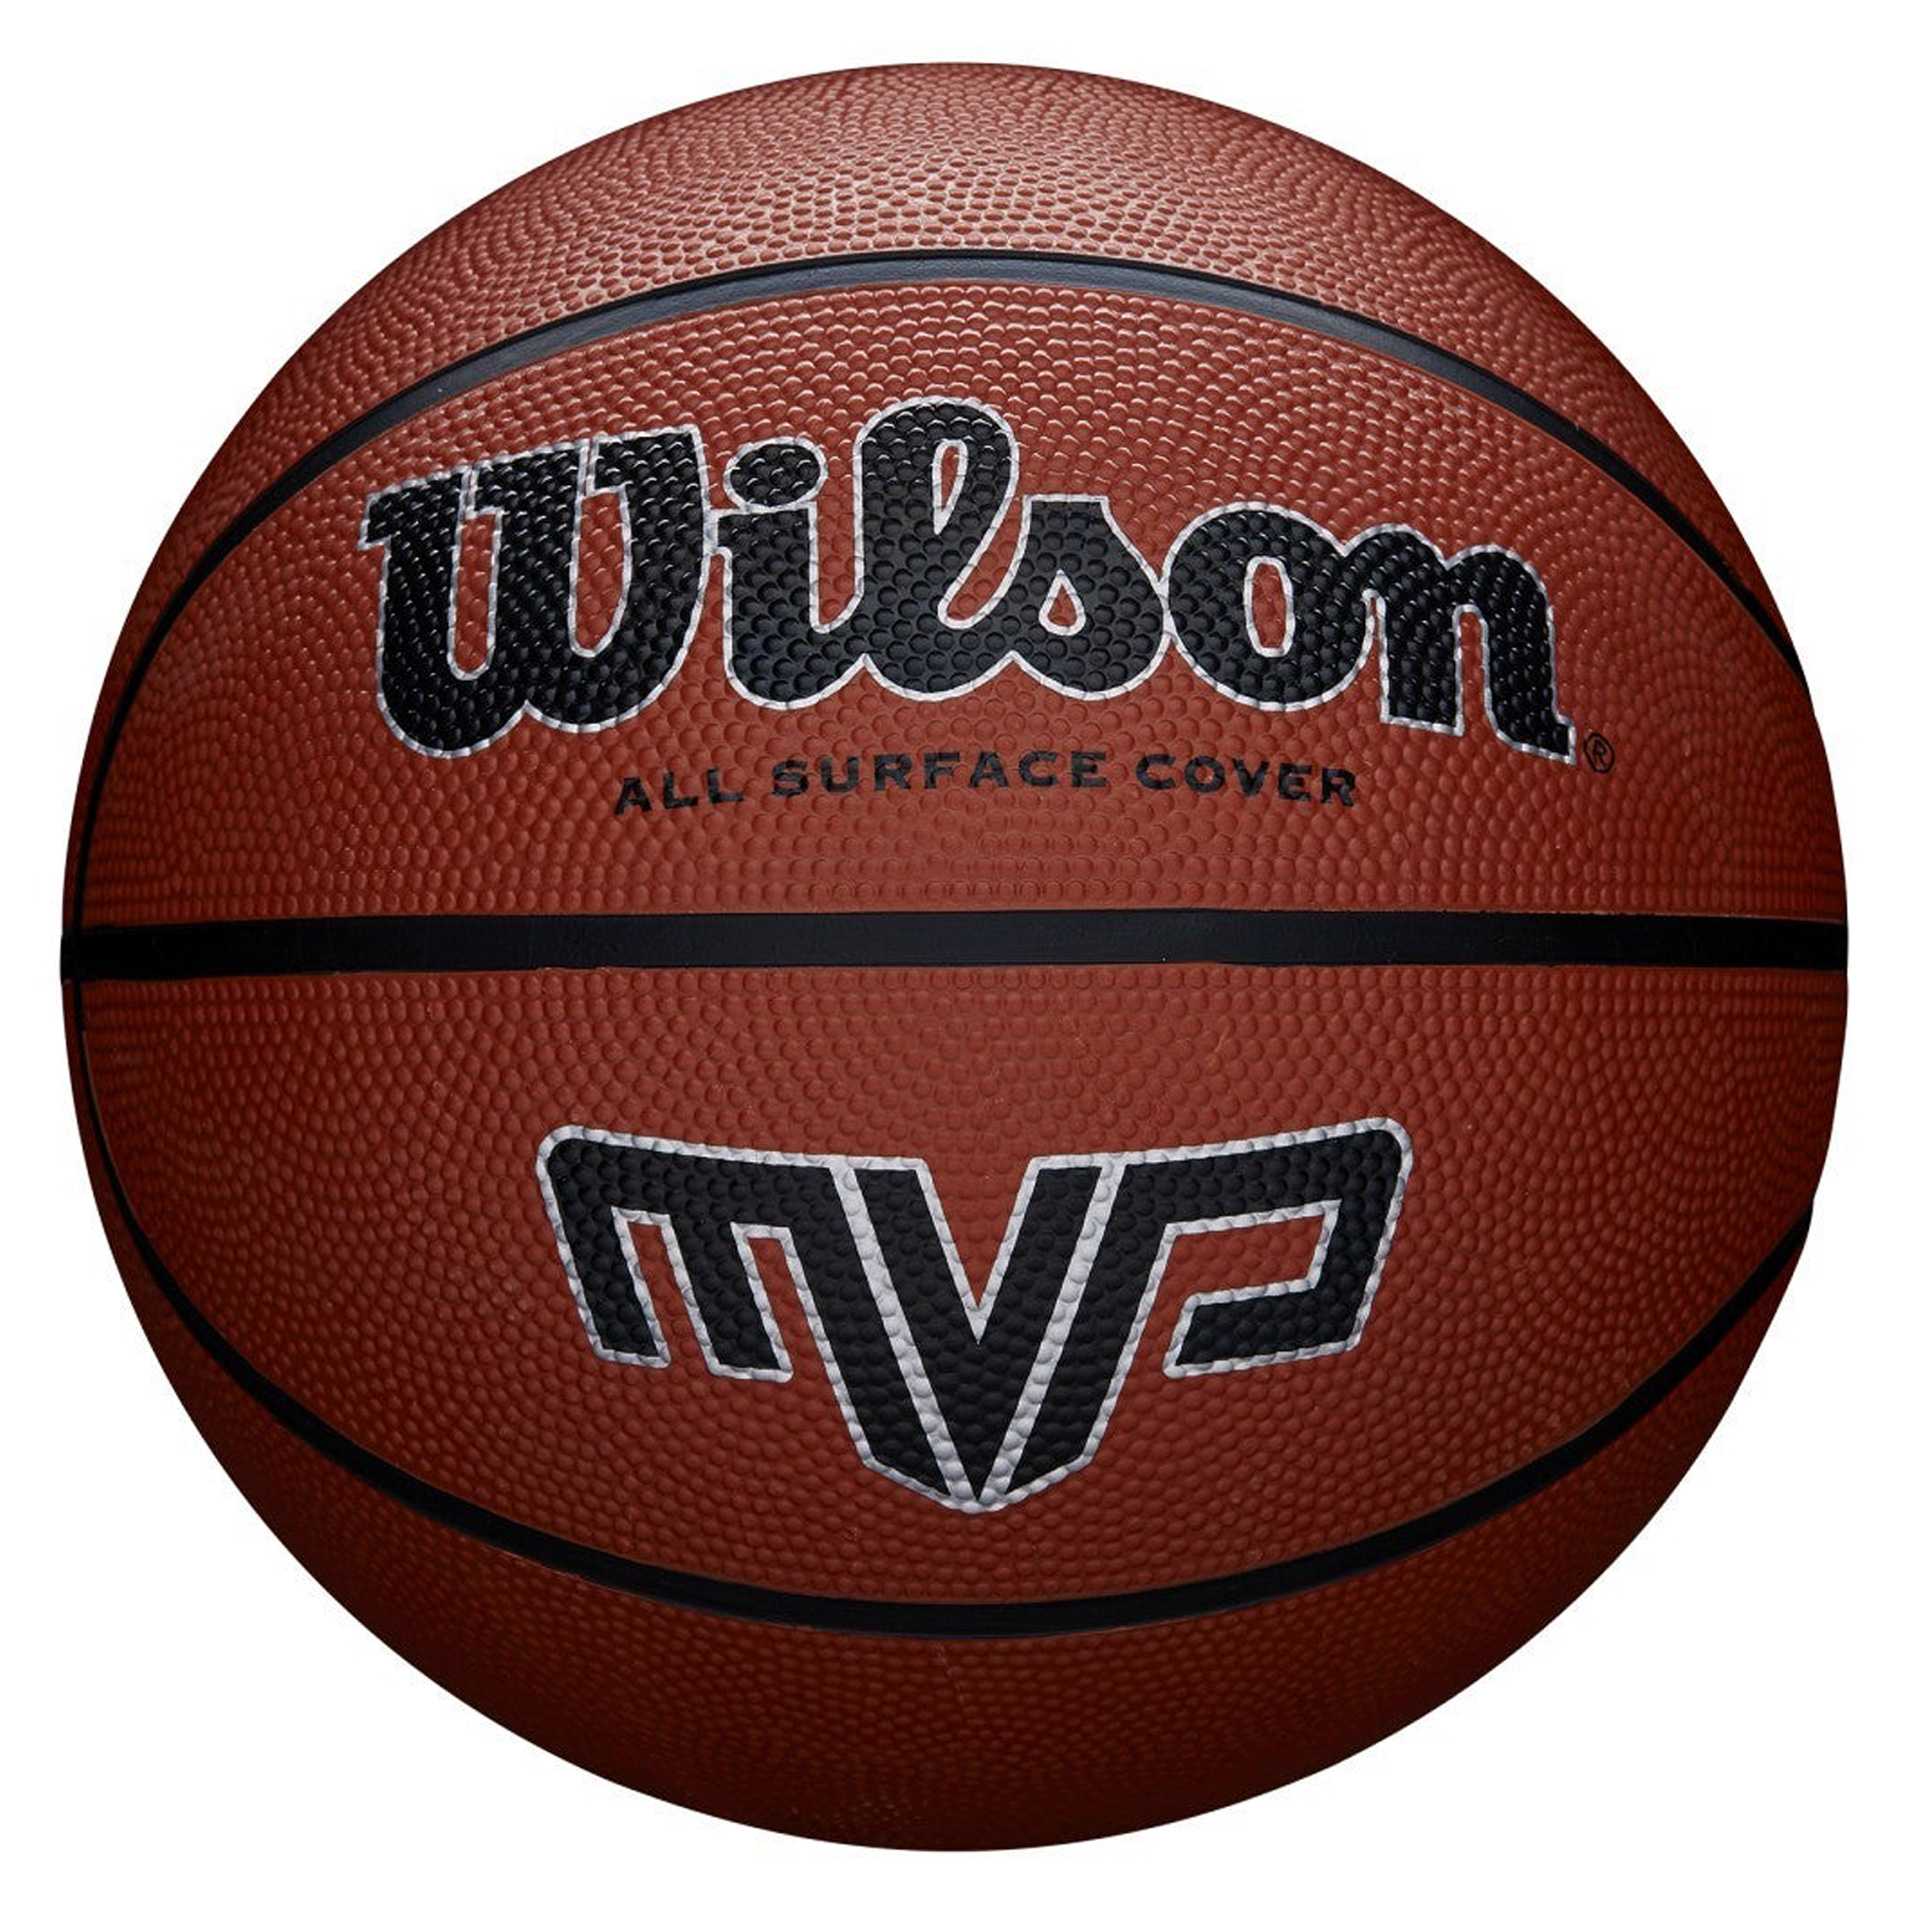 Balon baloncesto wilson mvp bskt brown